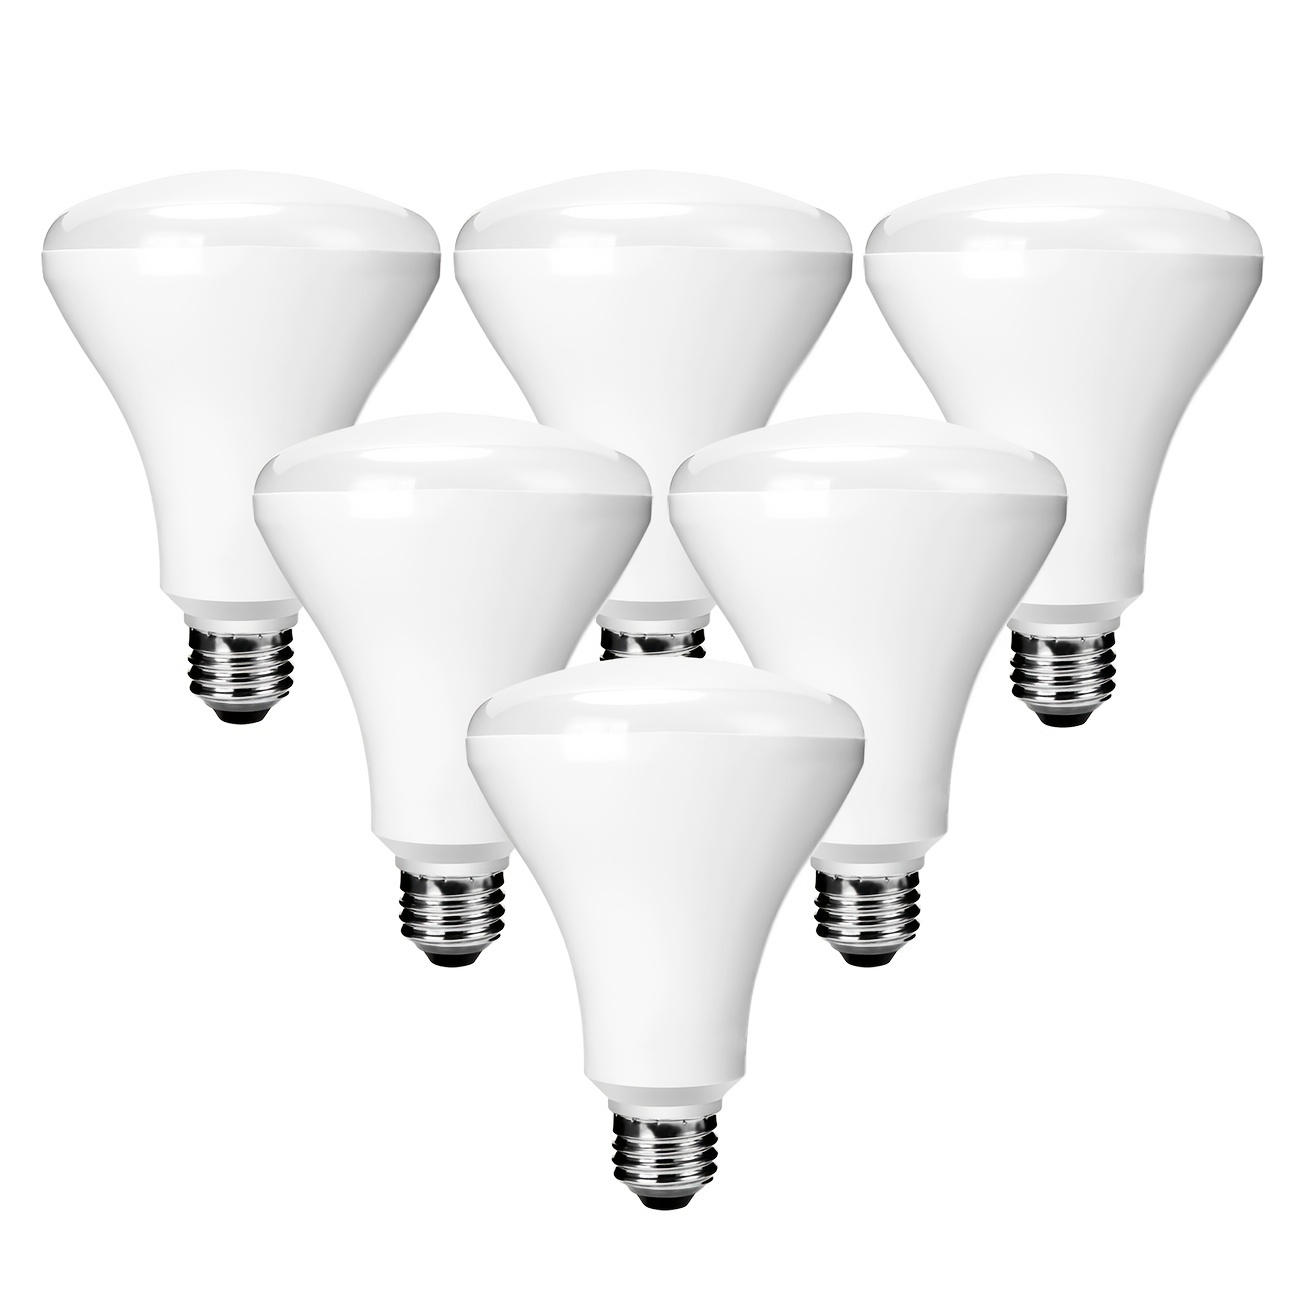 Bombilla LED T10, intensidad regulable, 6 W, luz blanca suave de 3000 K,  equivalente a bombilla incandescente de 60 W, blanco suave de 3000 K,  cristal transparente, bombilla de base E26, para